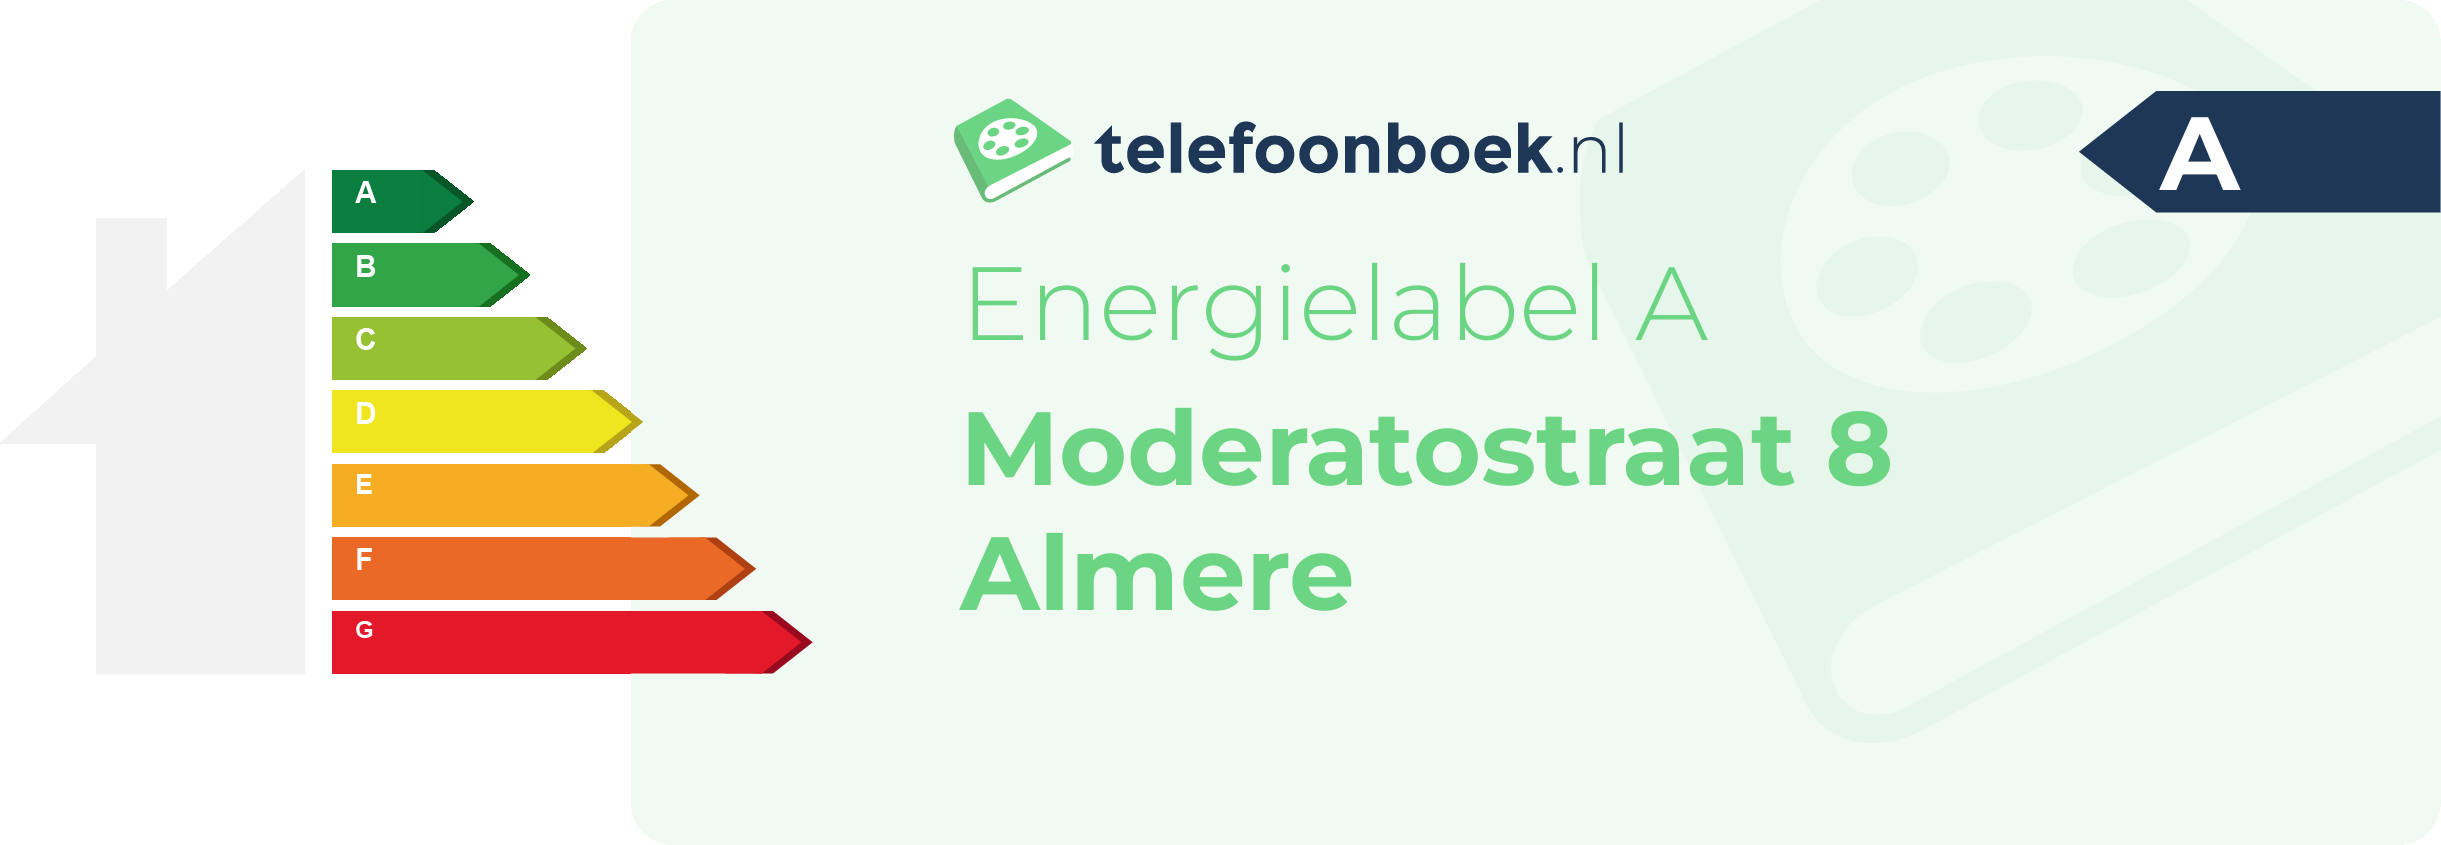 Energielabel Moderatostraat 8 Almere